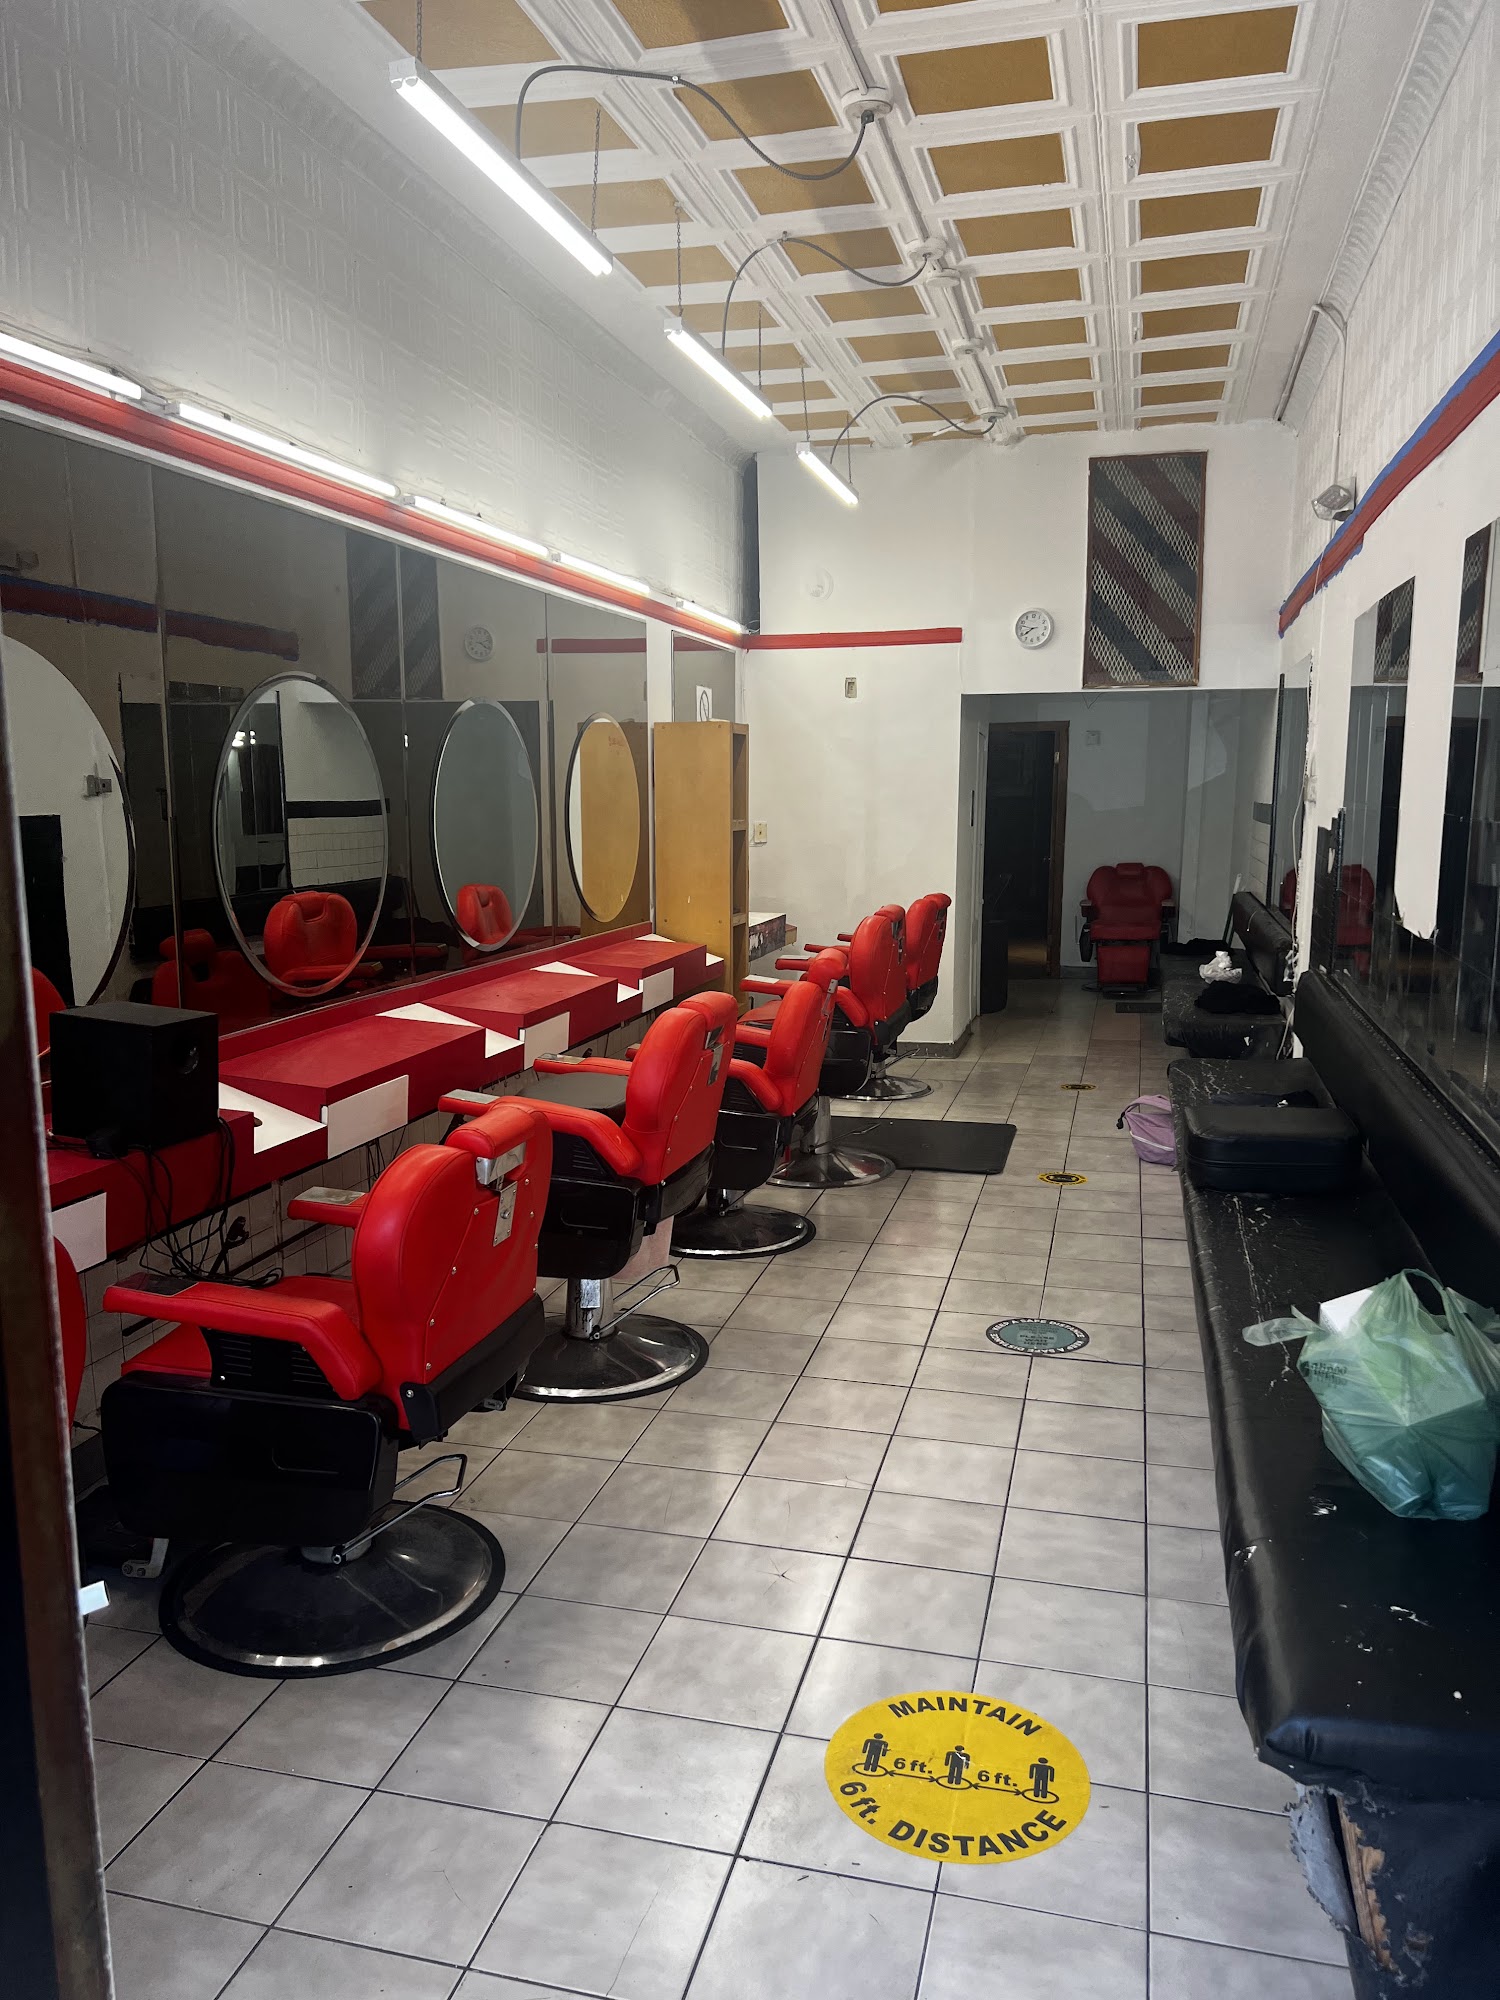 Engel’s barbershop 989 River St, Hyde Park Massachusetts 02136